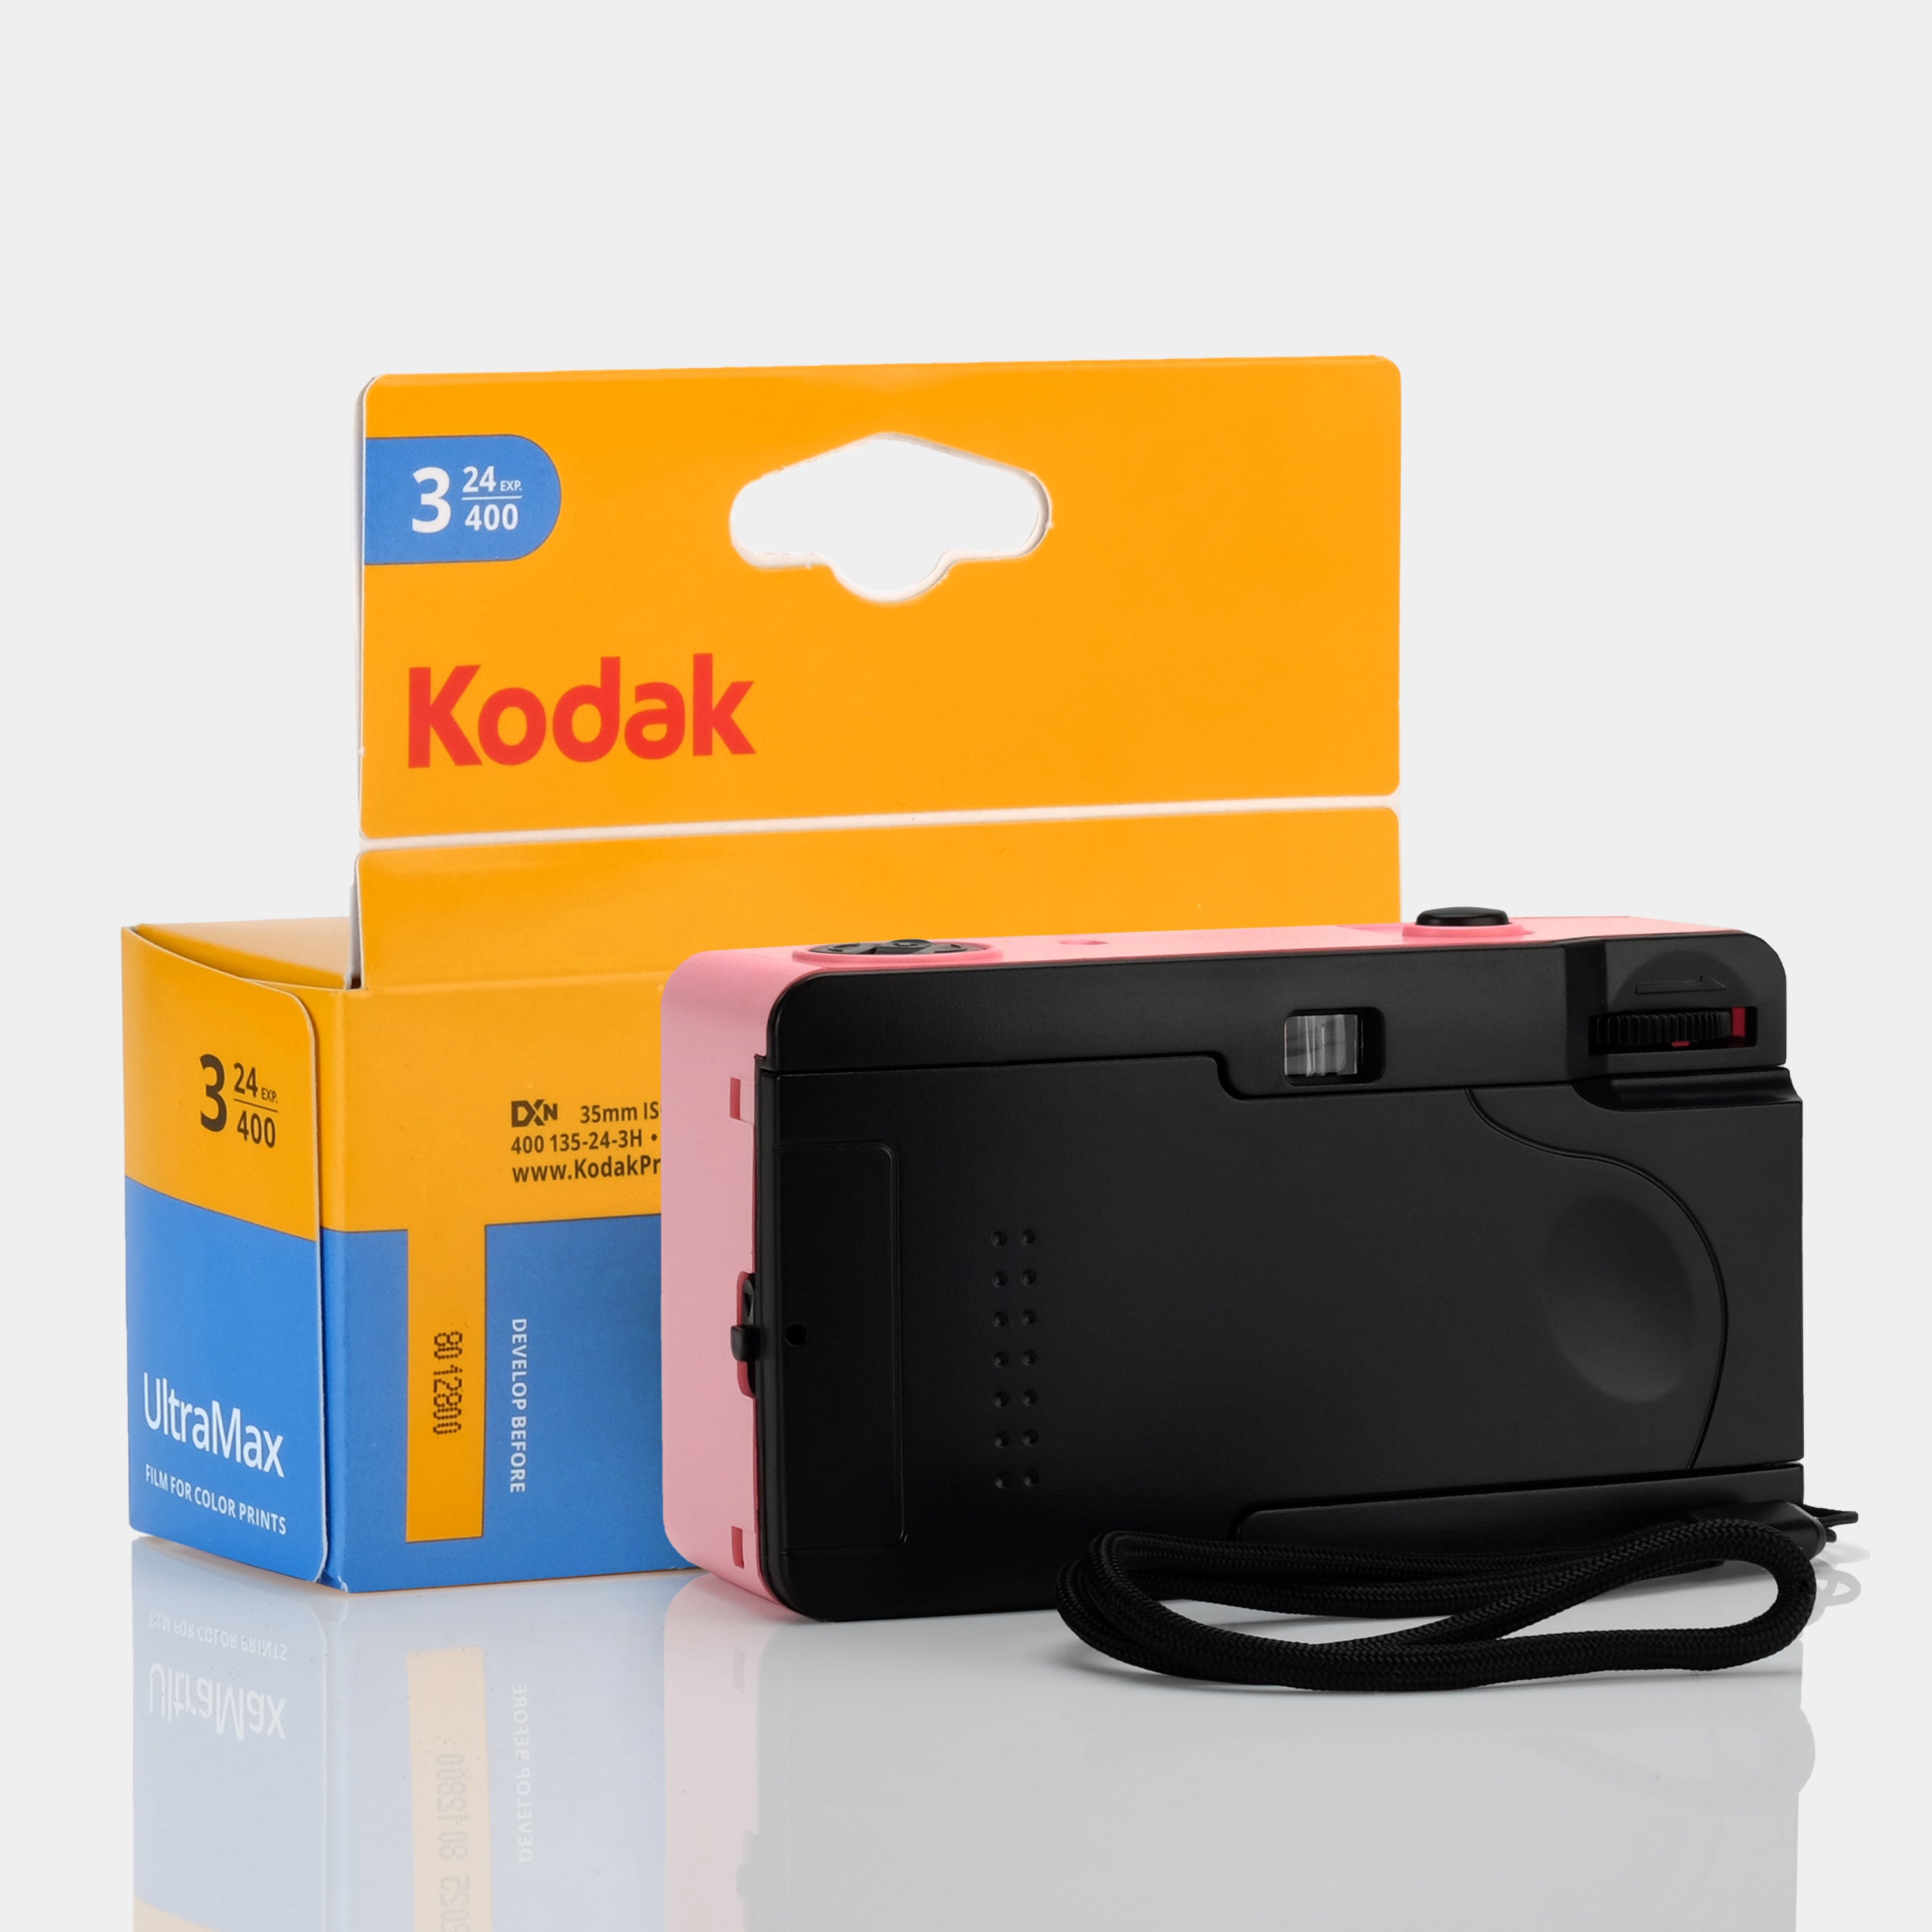 Kodak M35 Reusable 35mm Point and Shoot Pink Camera With 3-Pack Kodak UltraMax Film